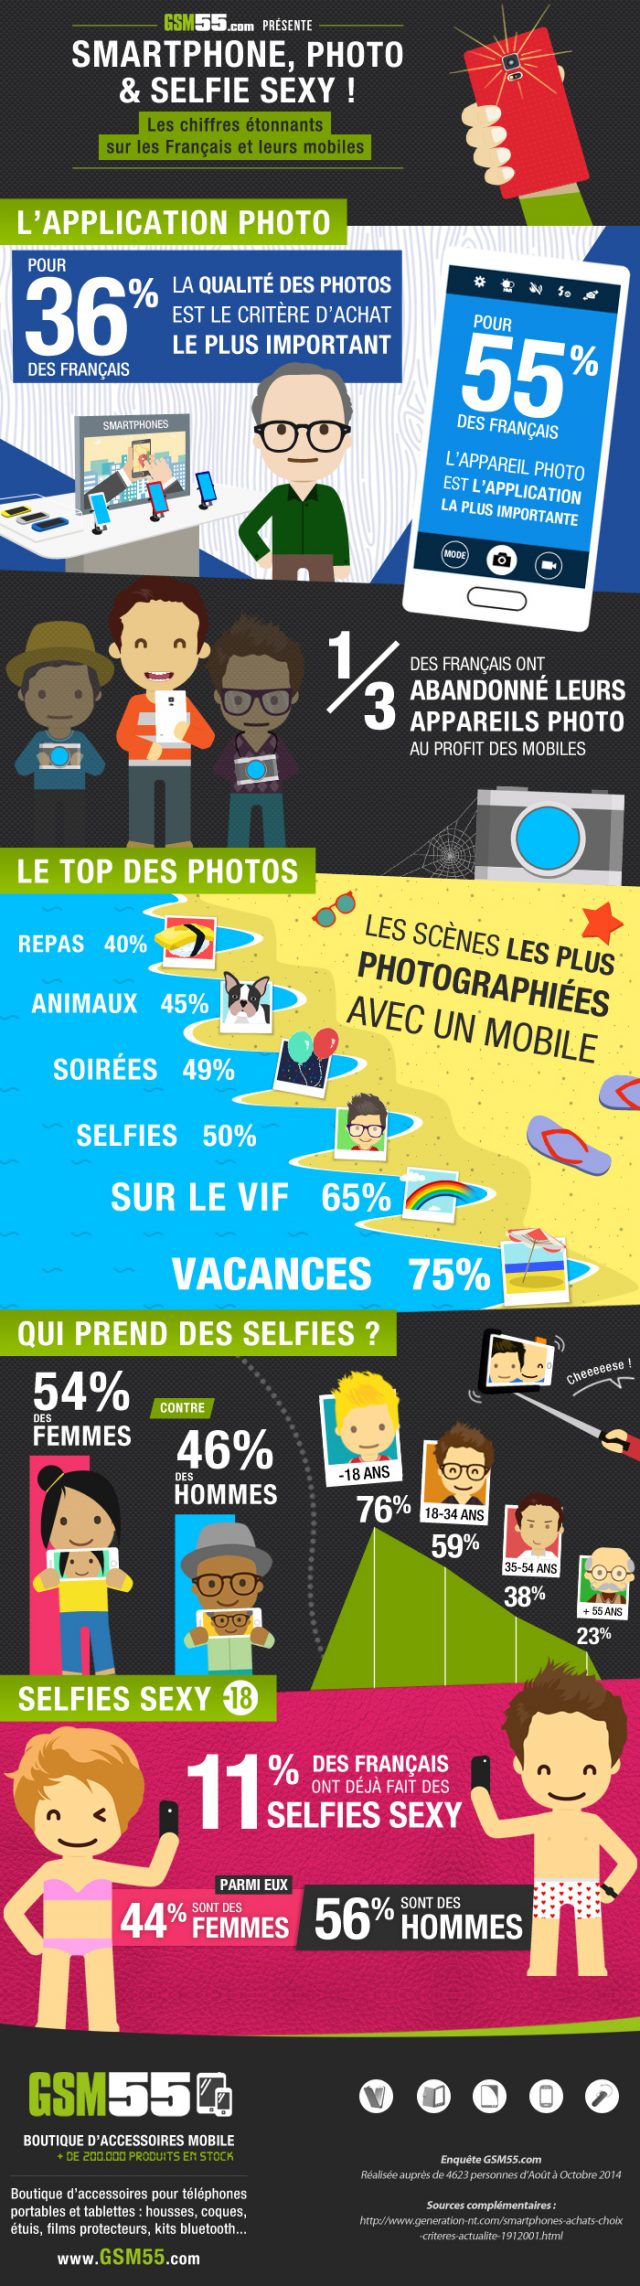 Infographie : Smartphone, photo & selfie sexy